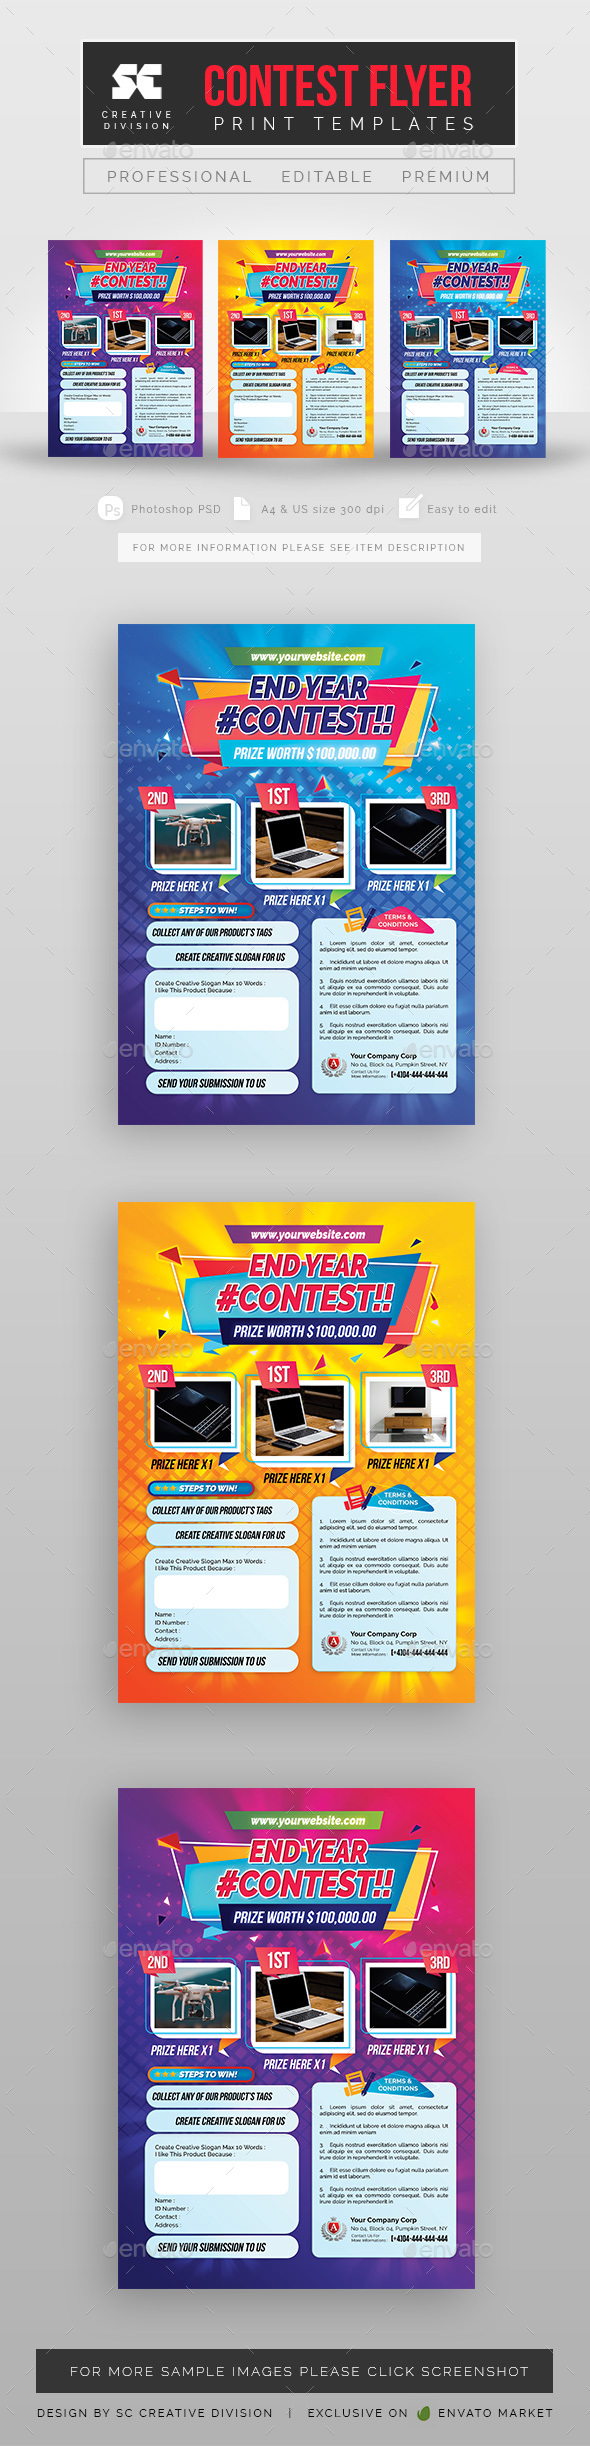 Contest Flyer